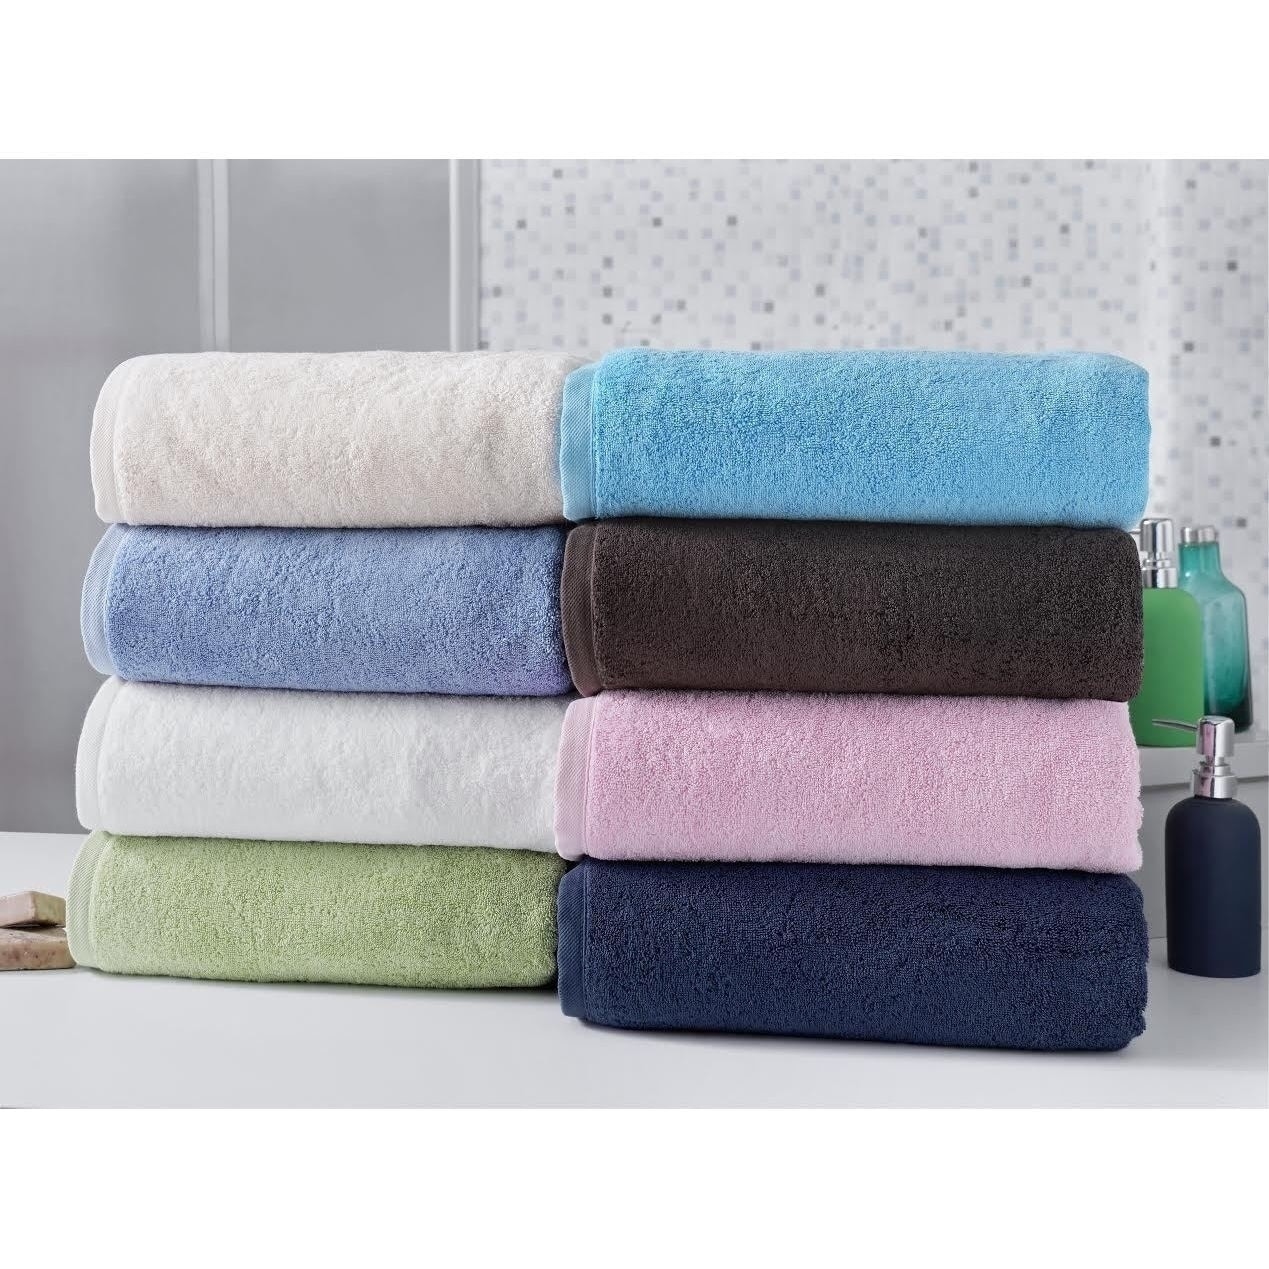 American Soft Linen Bath Sheet 40x80 inch 100% Cotton Extra Large Oversized Bath Towel Sheet - Malibu Peach, Size: Oversized Bath Sheet 40x80, Orange